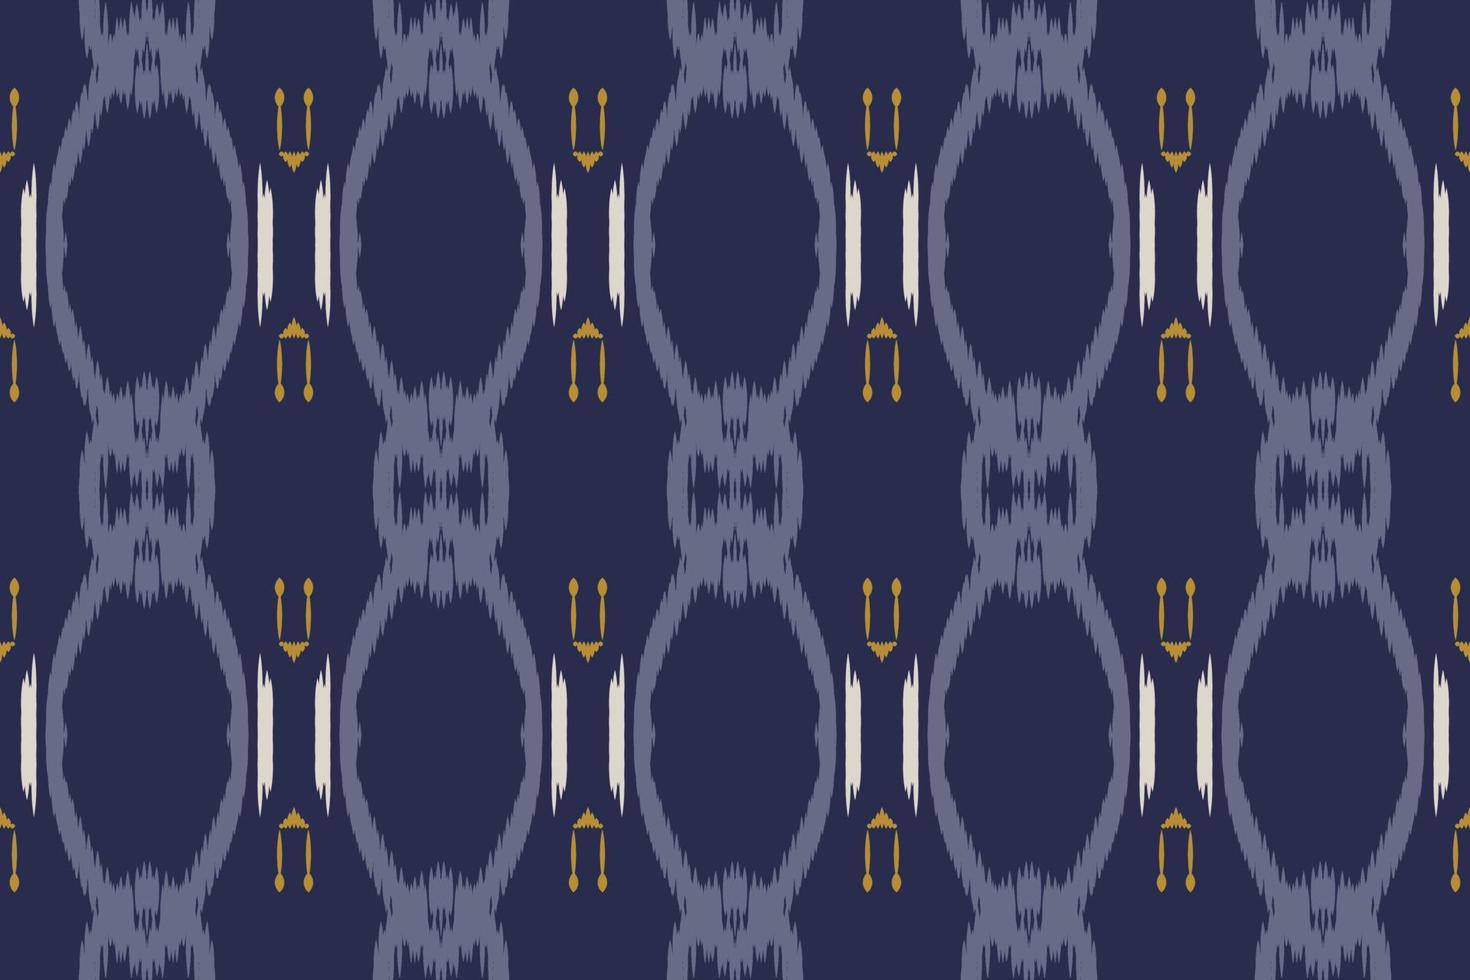 ikkat o ikat diamante tribal chevron borneo escandinavo batik bohemio textura vector digital diseño para imprimir saree kurti tela cepillo símbolos muestras